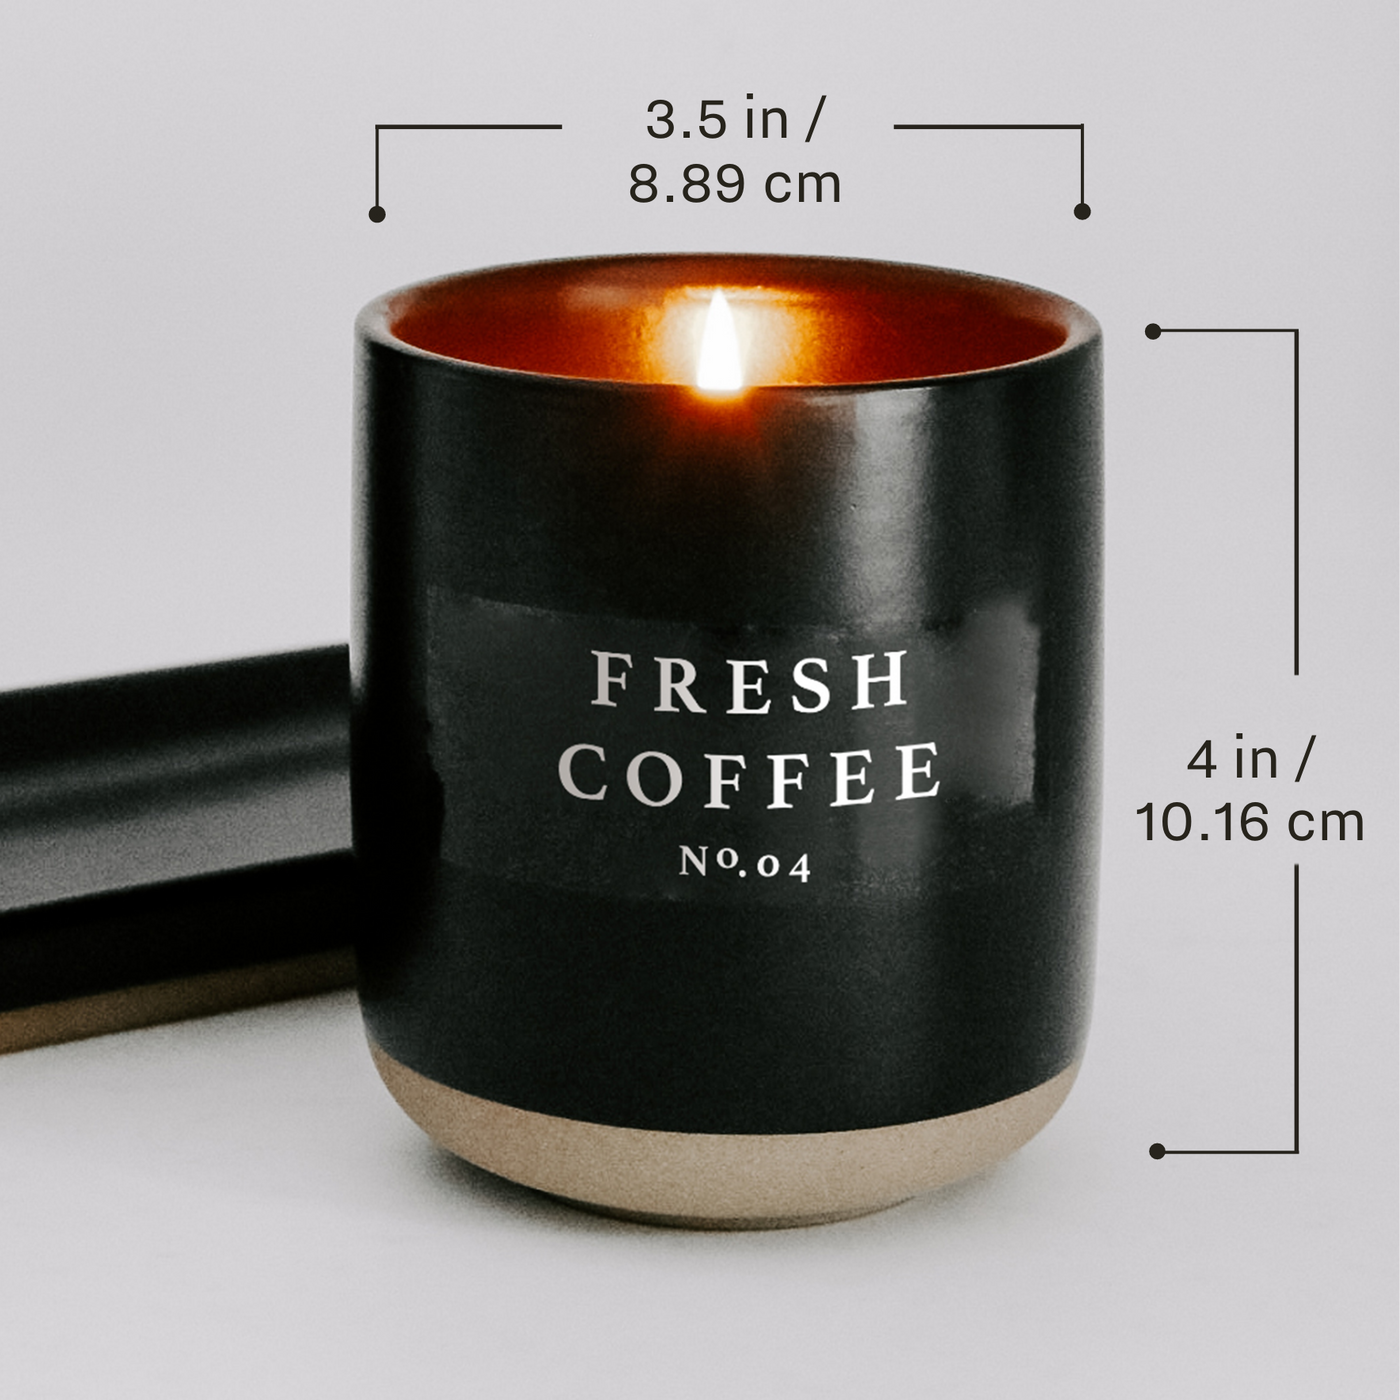 Fraser Fir Soy Candle - Black Stoneware Jar - 12 oz